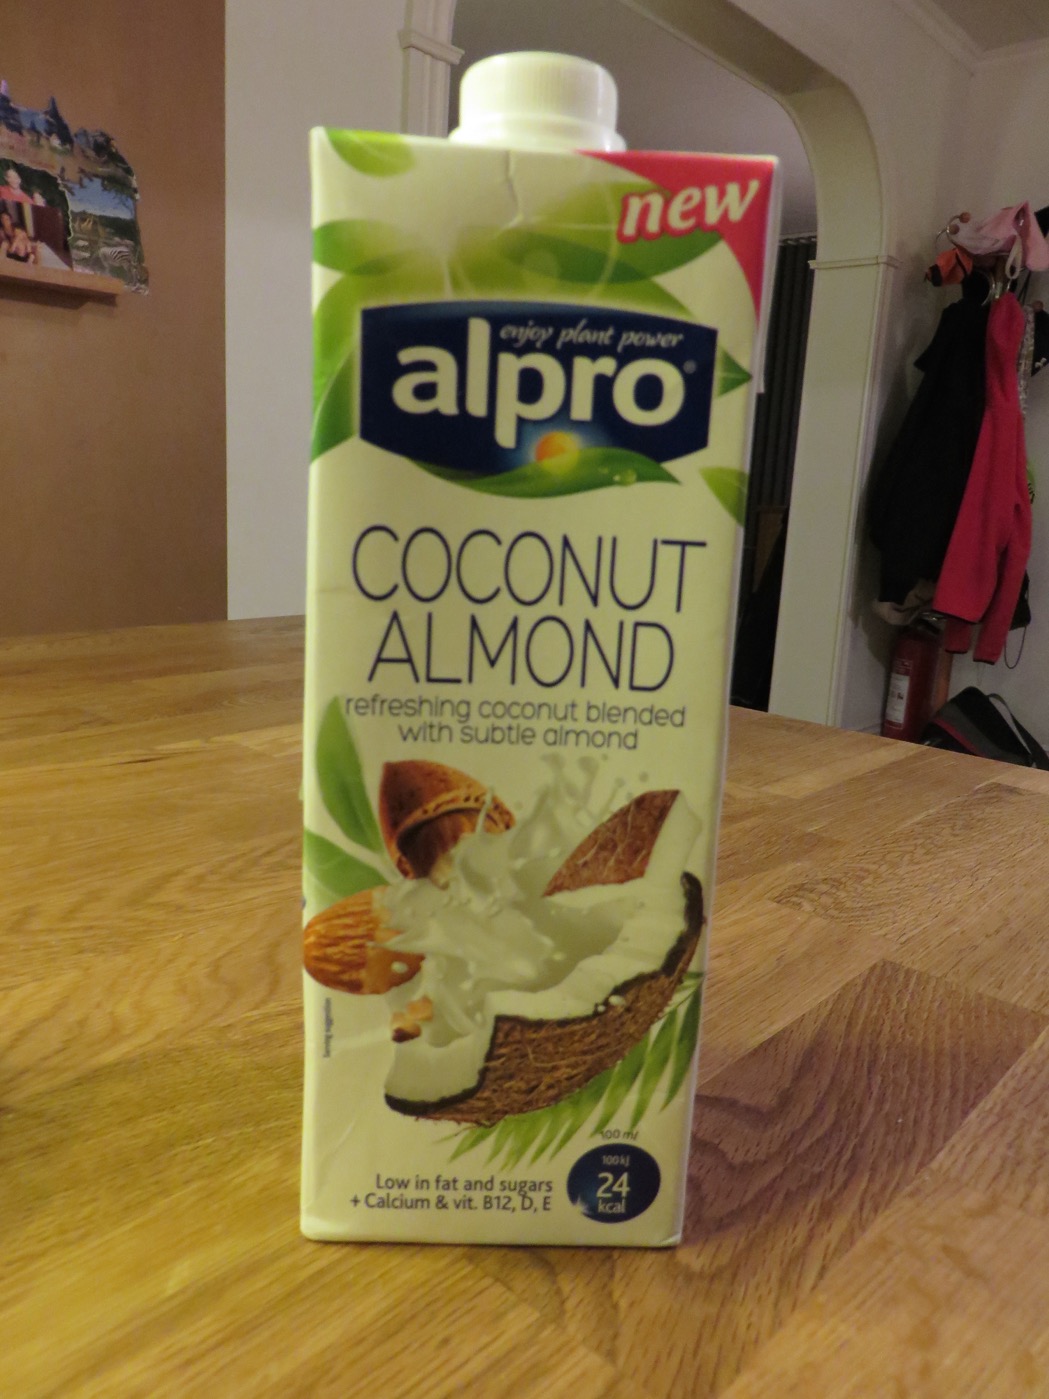 Coconut-Almond